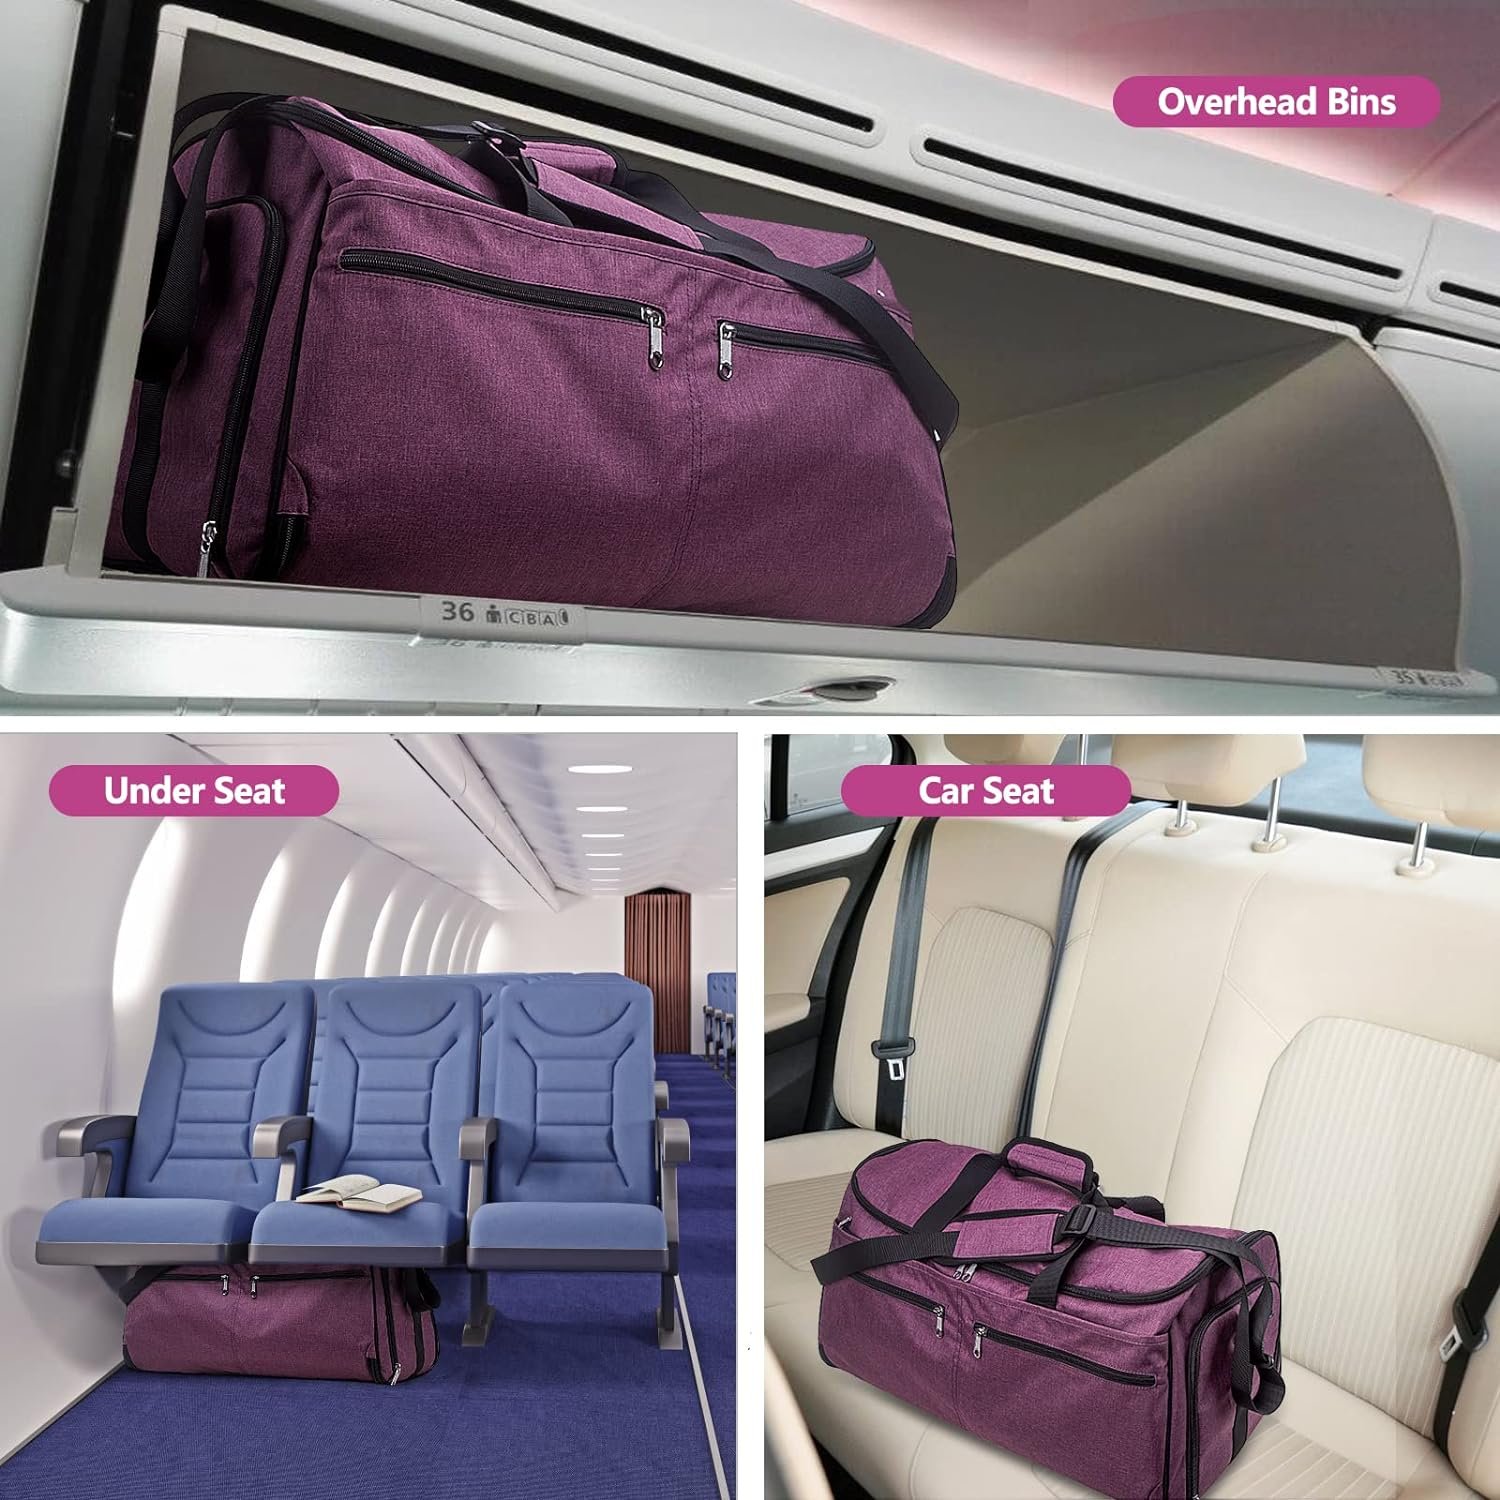 Carry on Garment Bag for Travel, Bukere Convertible Suit Travel Garment Duffel Bag for Women Business, Shoe Compartment, Detachable Shoulder Strap, 2 in 1 Hanging Suitcase Suit Travel Bags, Purple